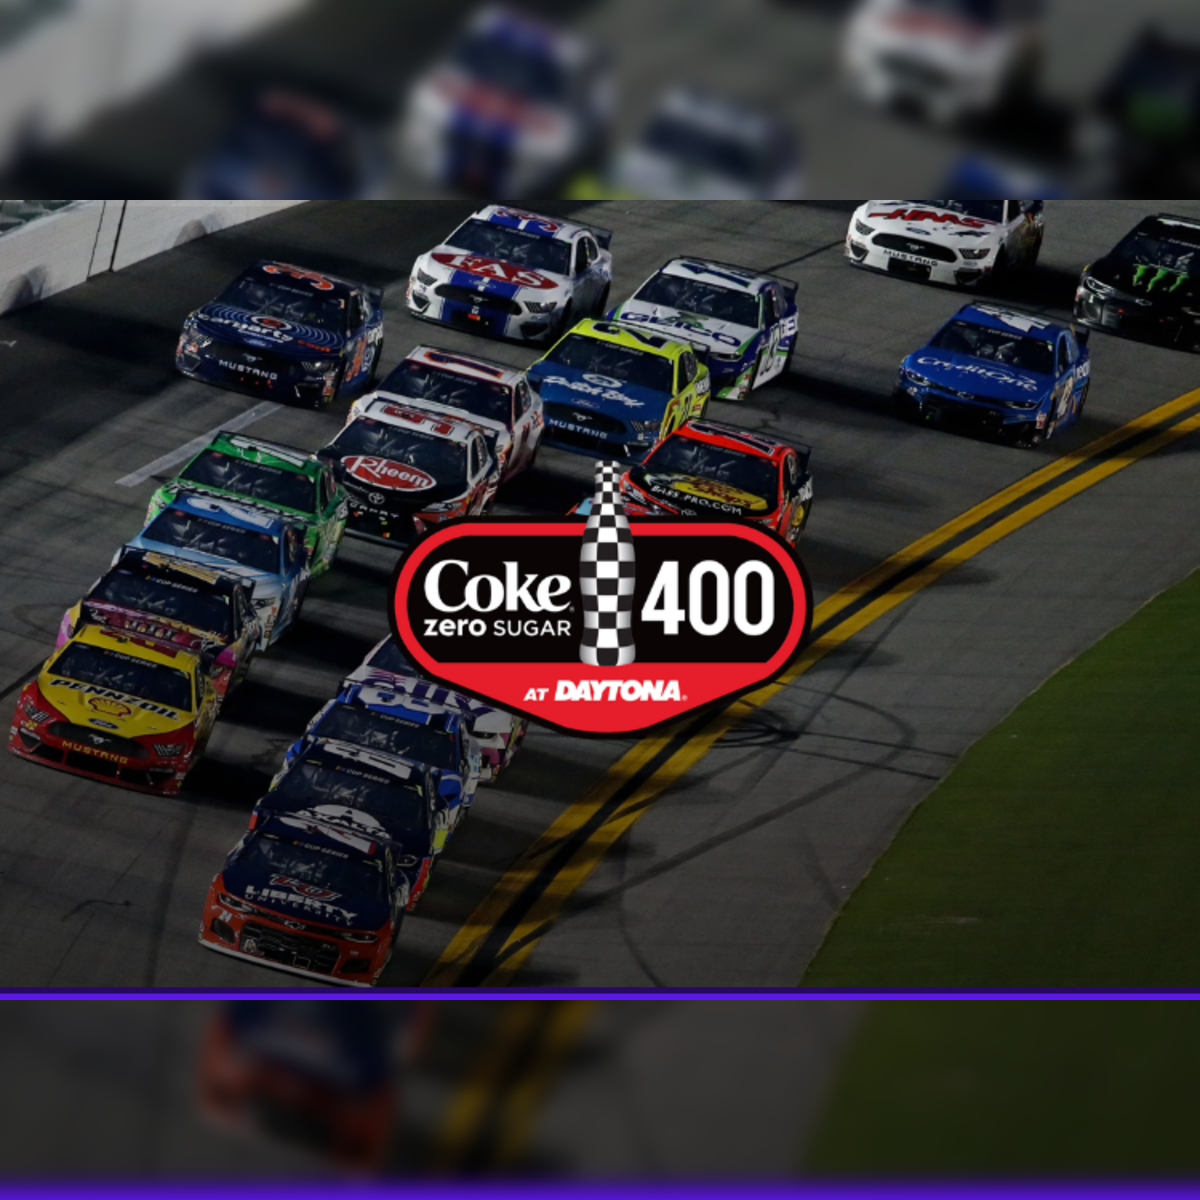 nascar race daytona NASCAR race 2023 at Daytona Coke Zero Sugar 400 start time, live streaming details